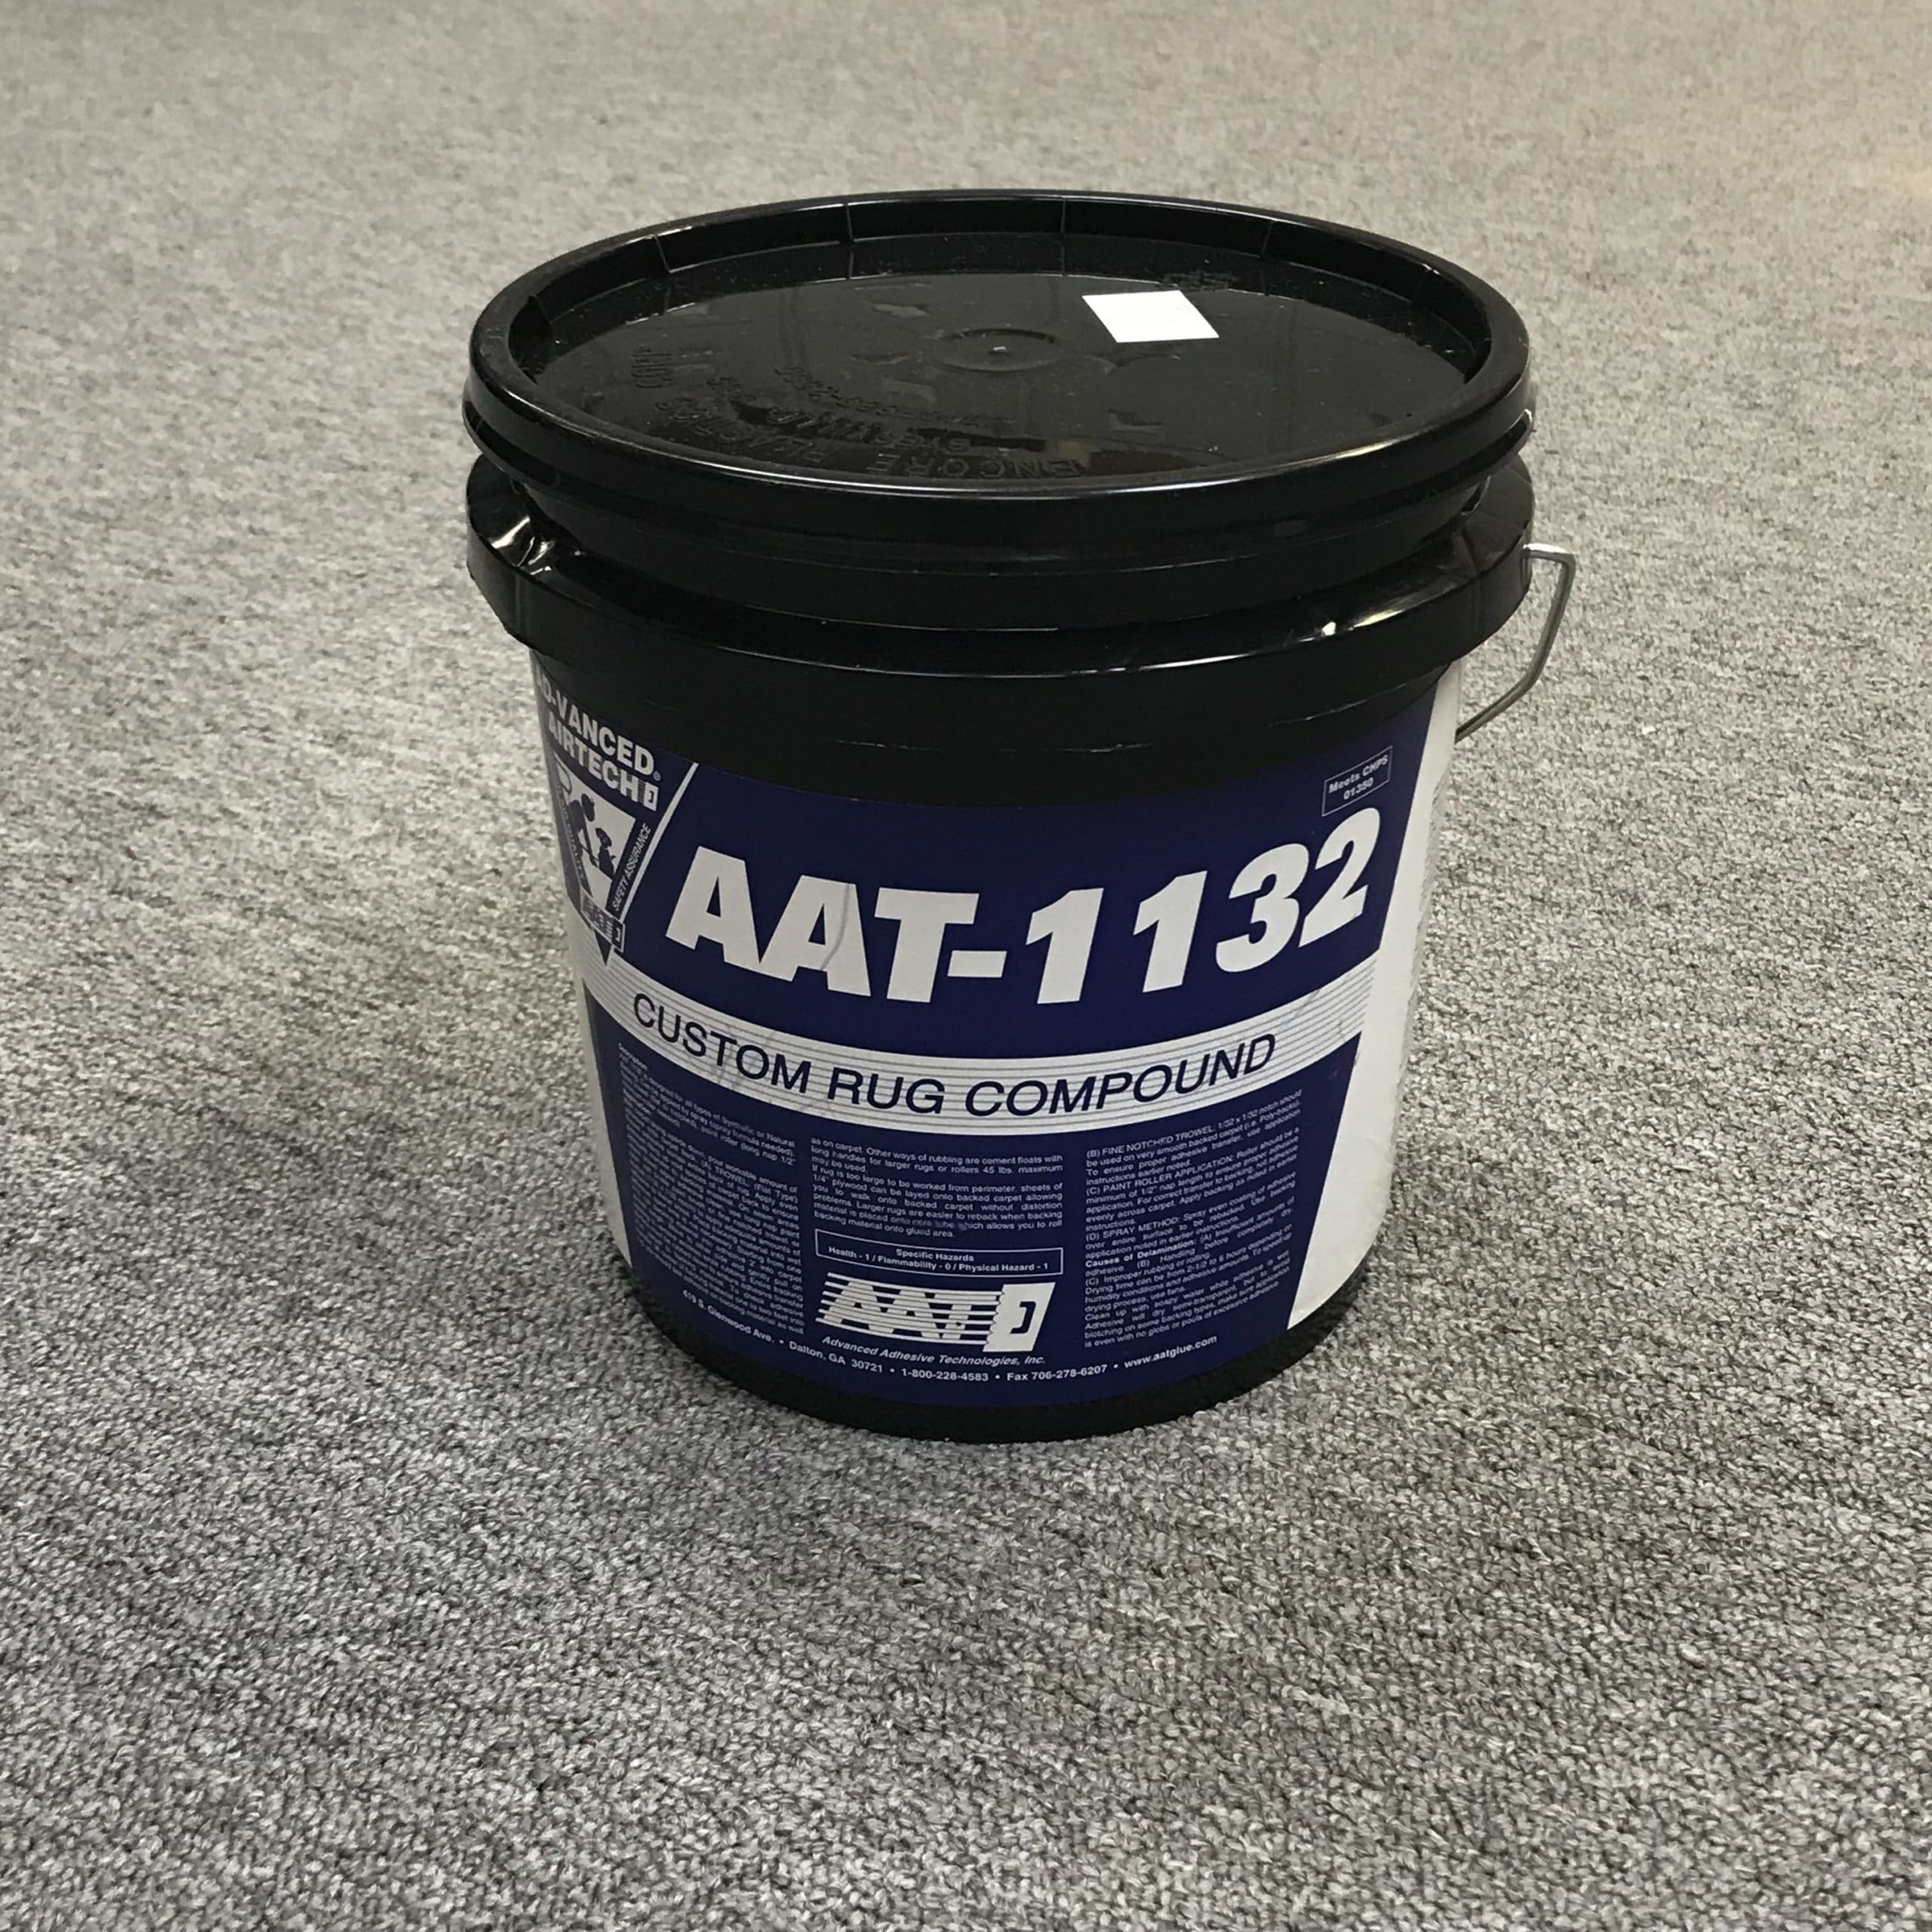 1132 Synthetic Latex Custom Rug Compound 1 Gallon jug - Bond Products Inc